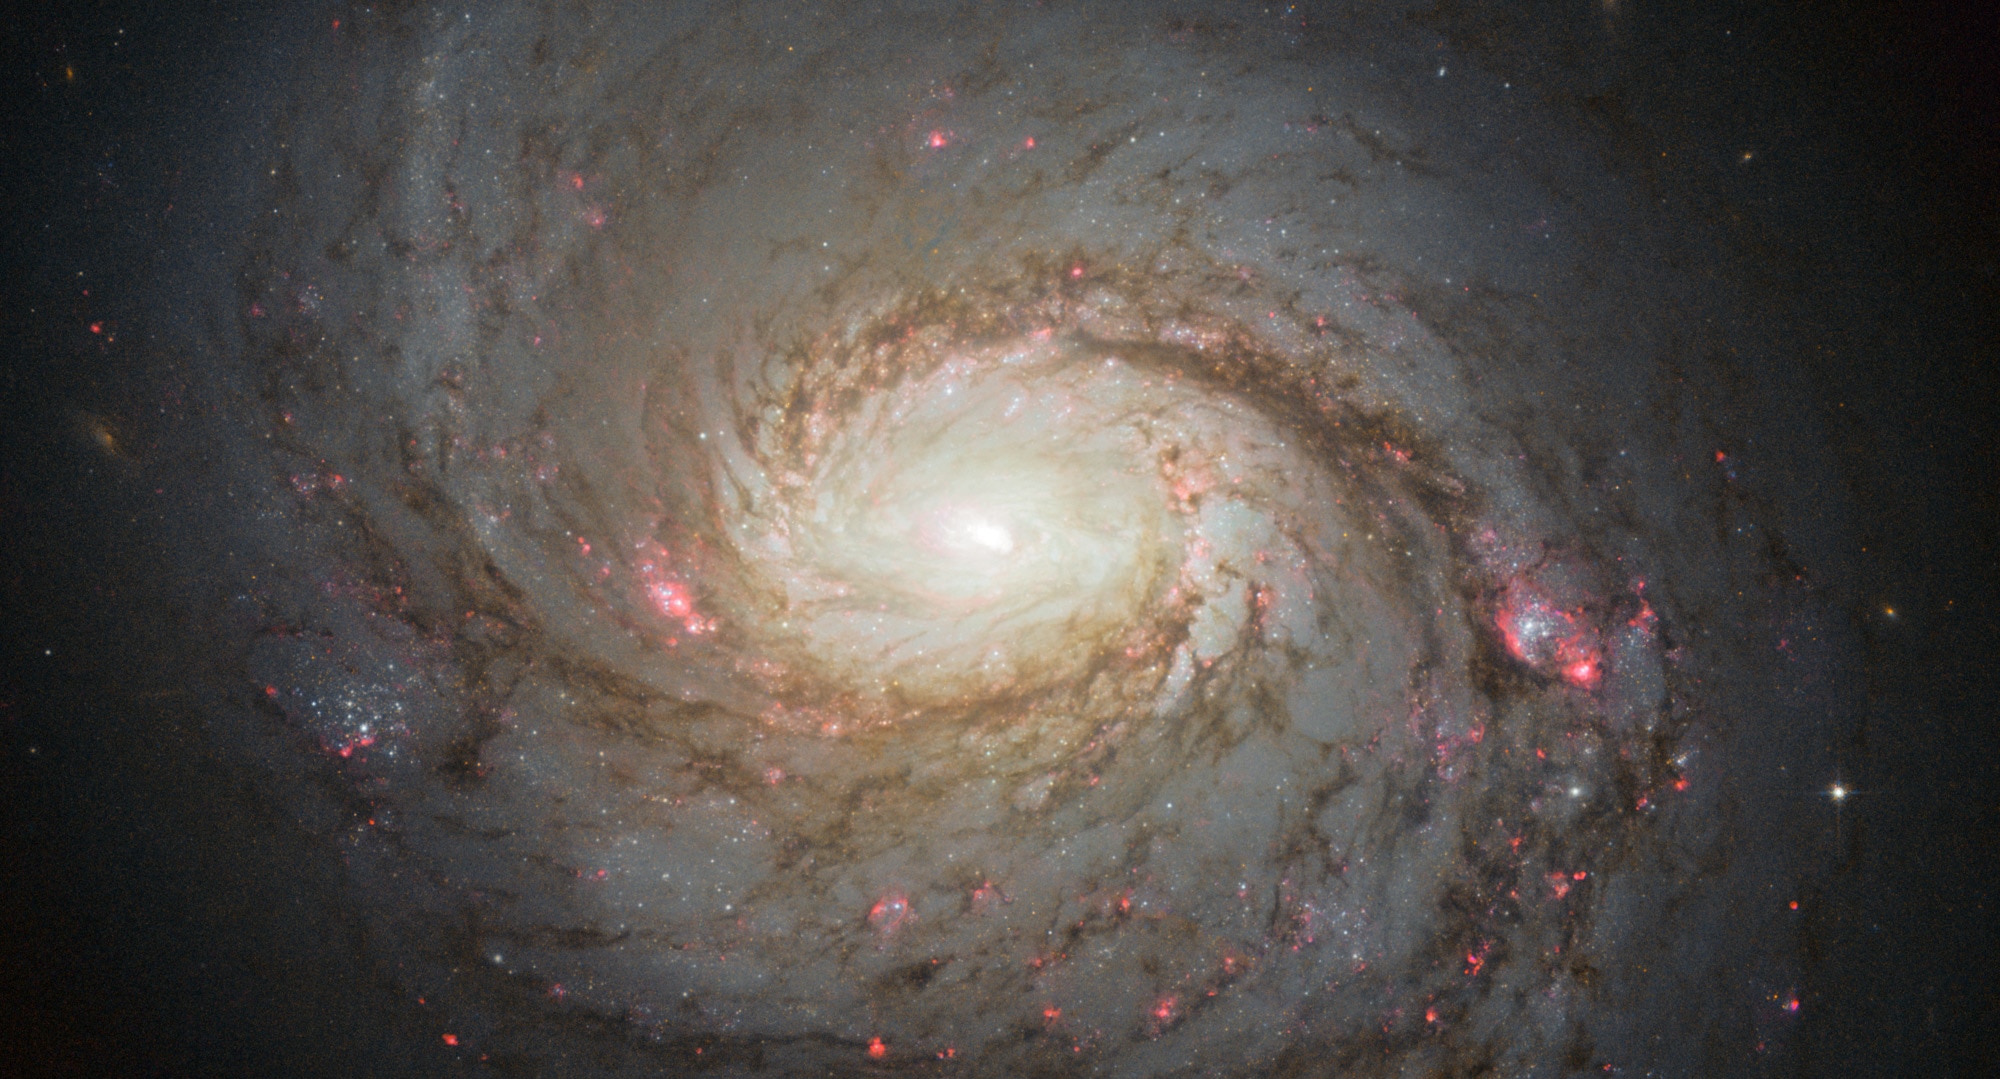 Hubble image of the magnificent spiral galaxy M 77. Credit: NASA, ESA & A. van der Hoeven